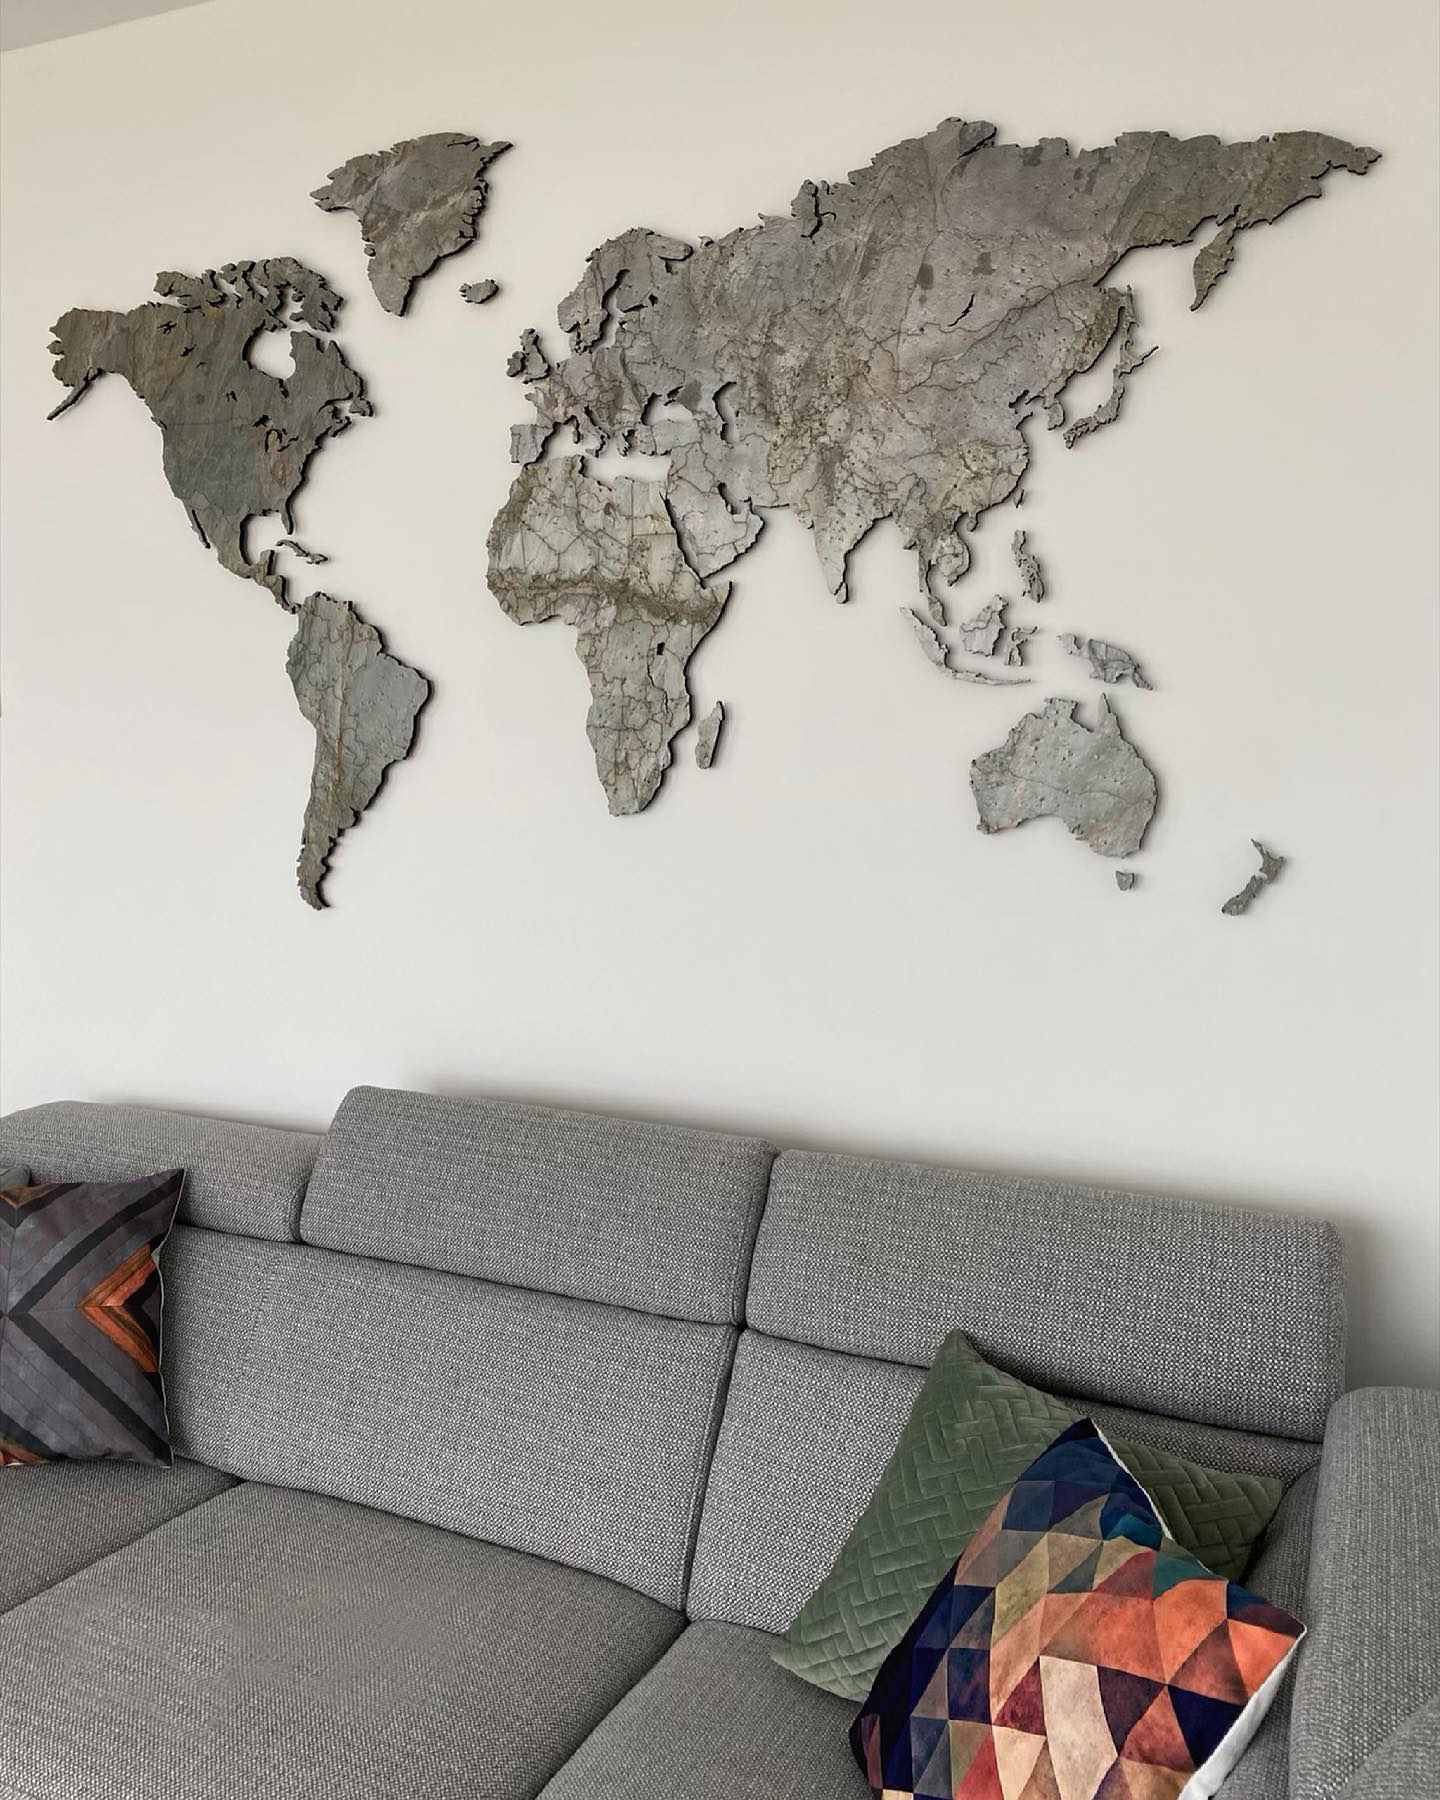 Карта из камня над диваном